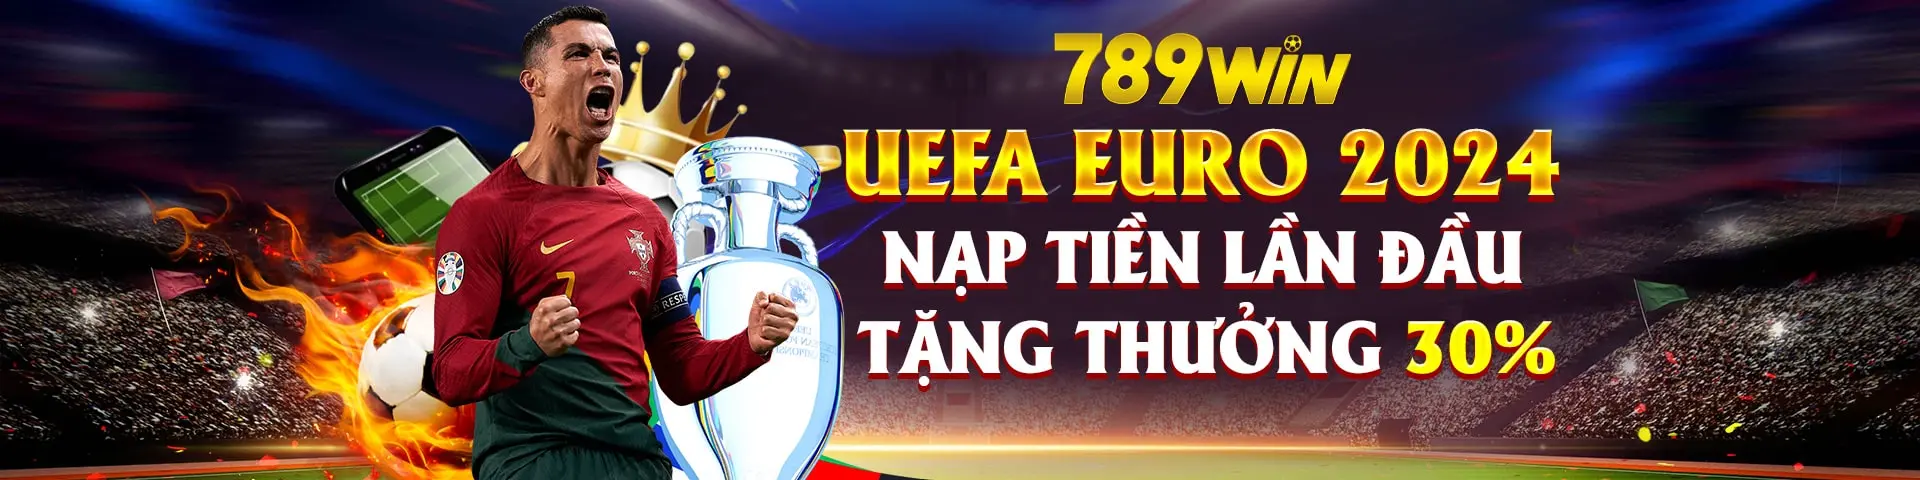 Mùa uefa euro 2024